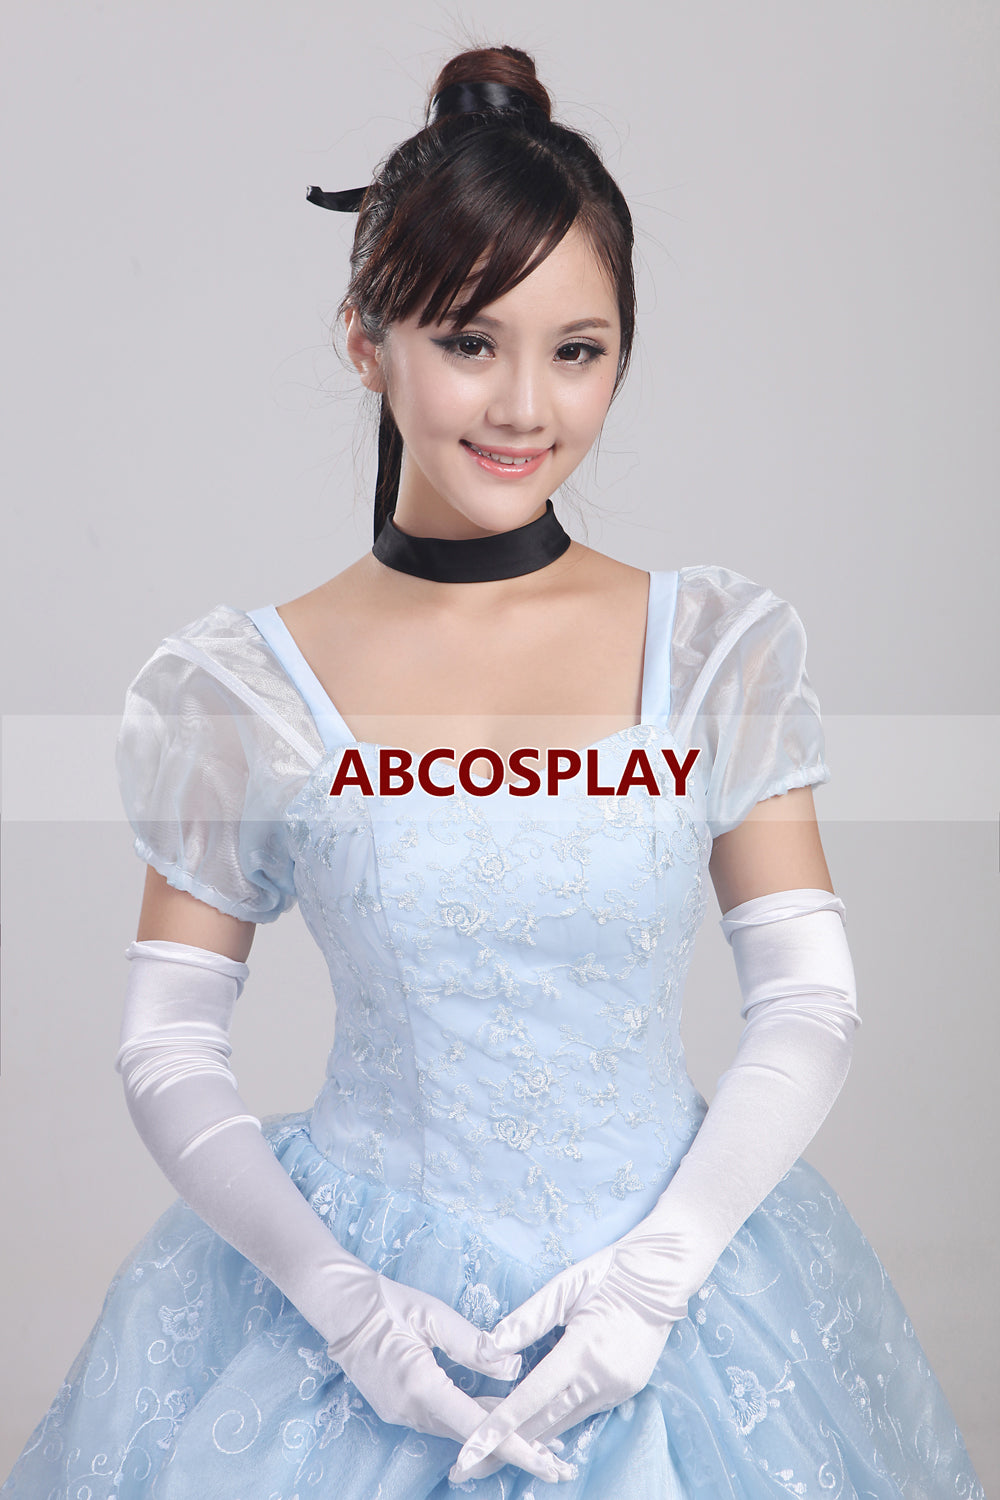 Cinderella Princess Dress Woman Adult Cosplay Costume